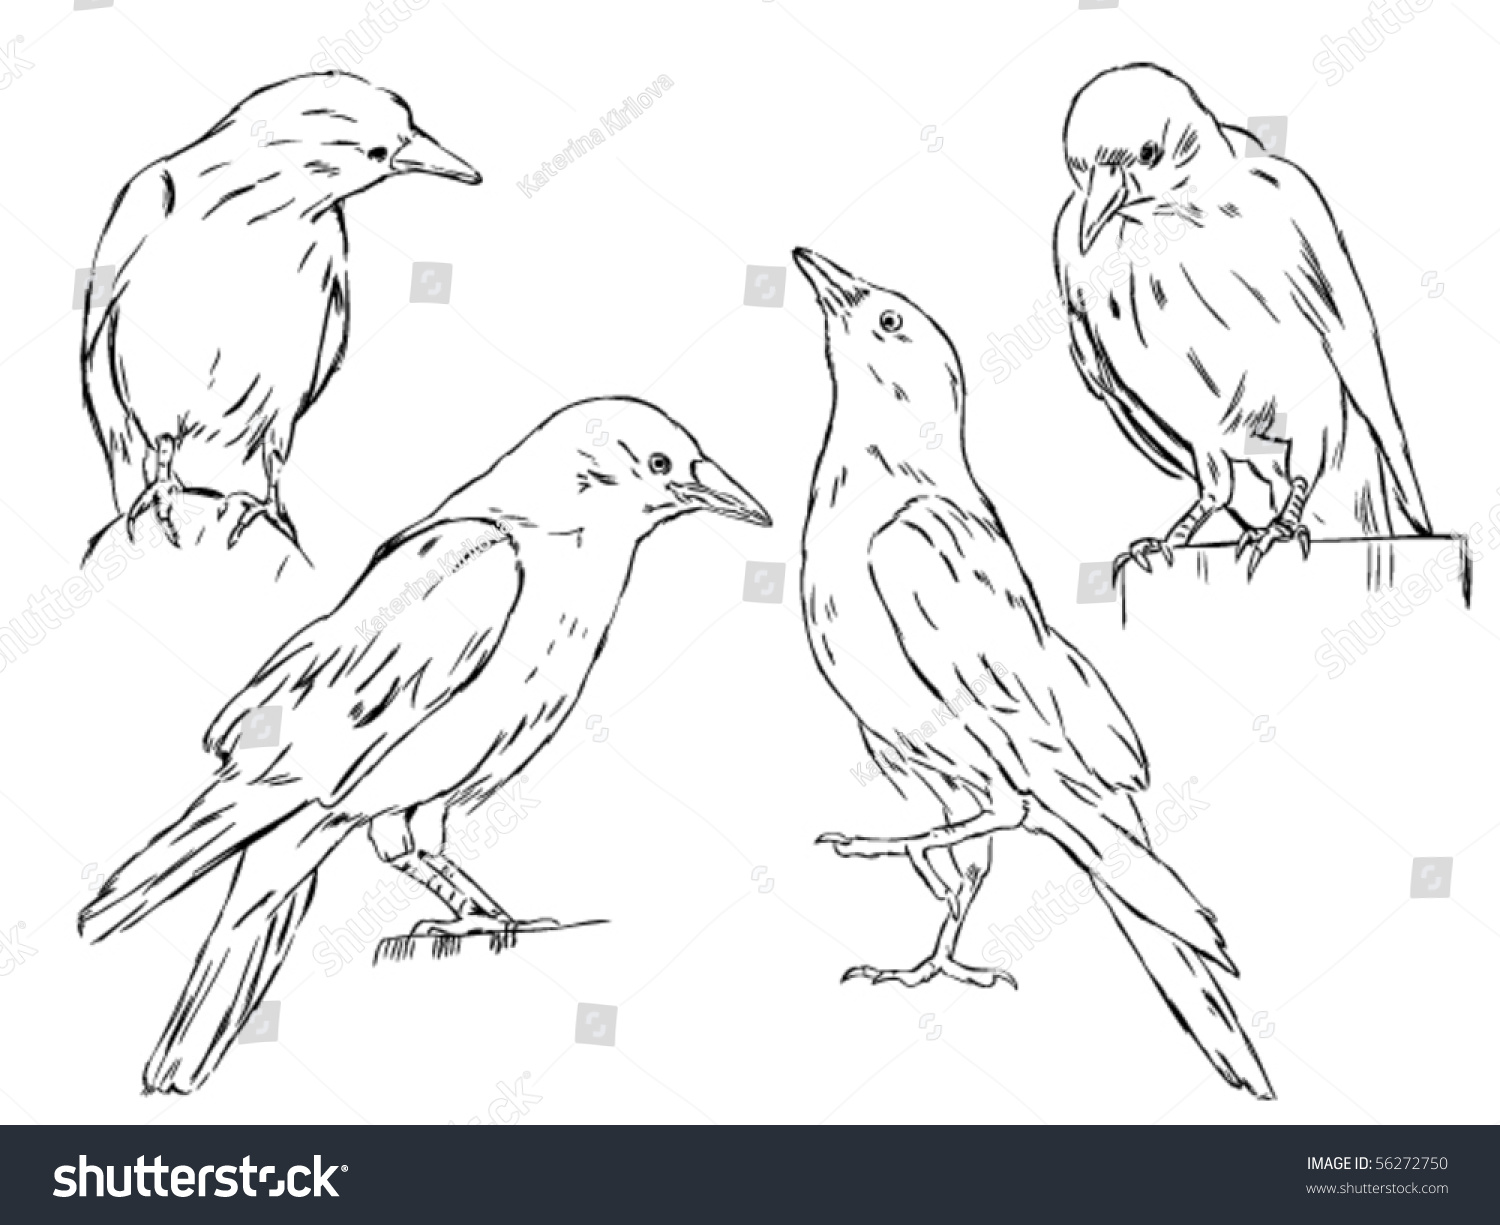 4 Crows Stock Vector Illustration 56272750 : Shutterstock